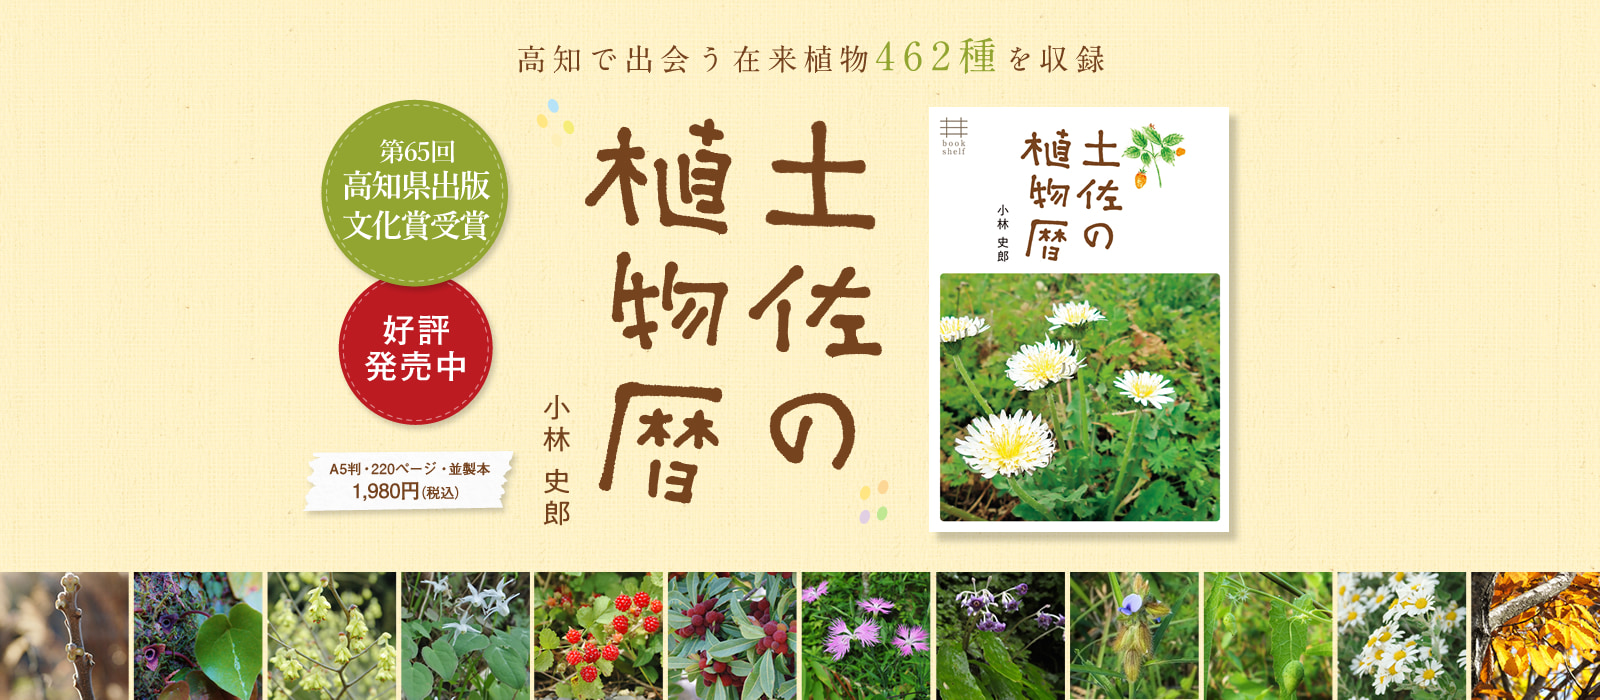 土佐の植物暦（著者・小林史郎） 2020年9月12日発売。A5判・220ページ・並製本、1,800円+税